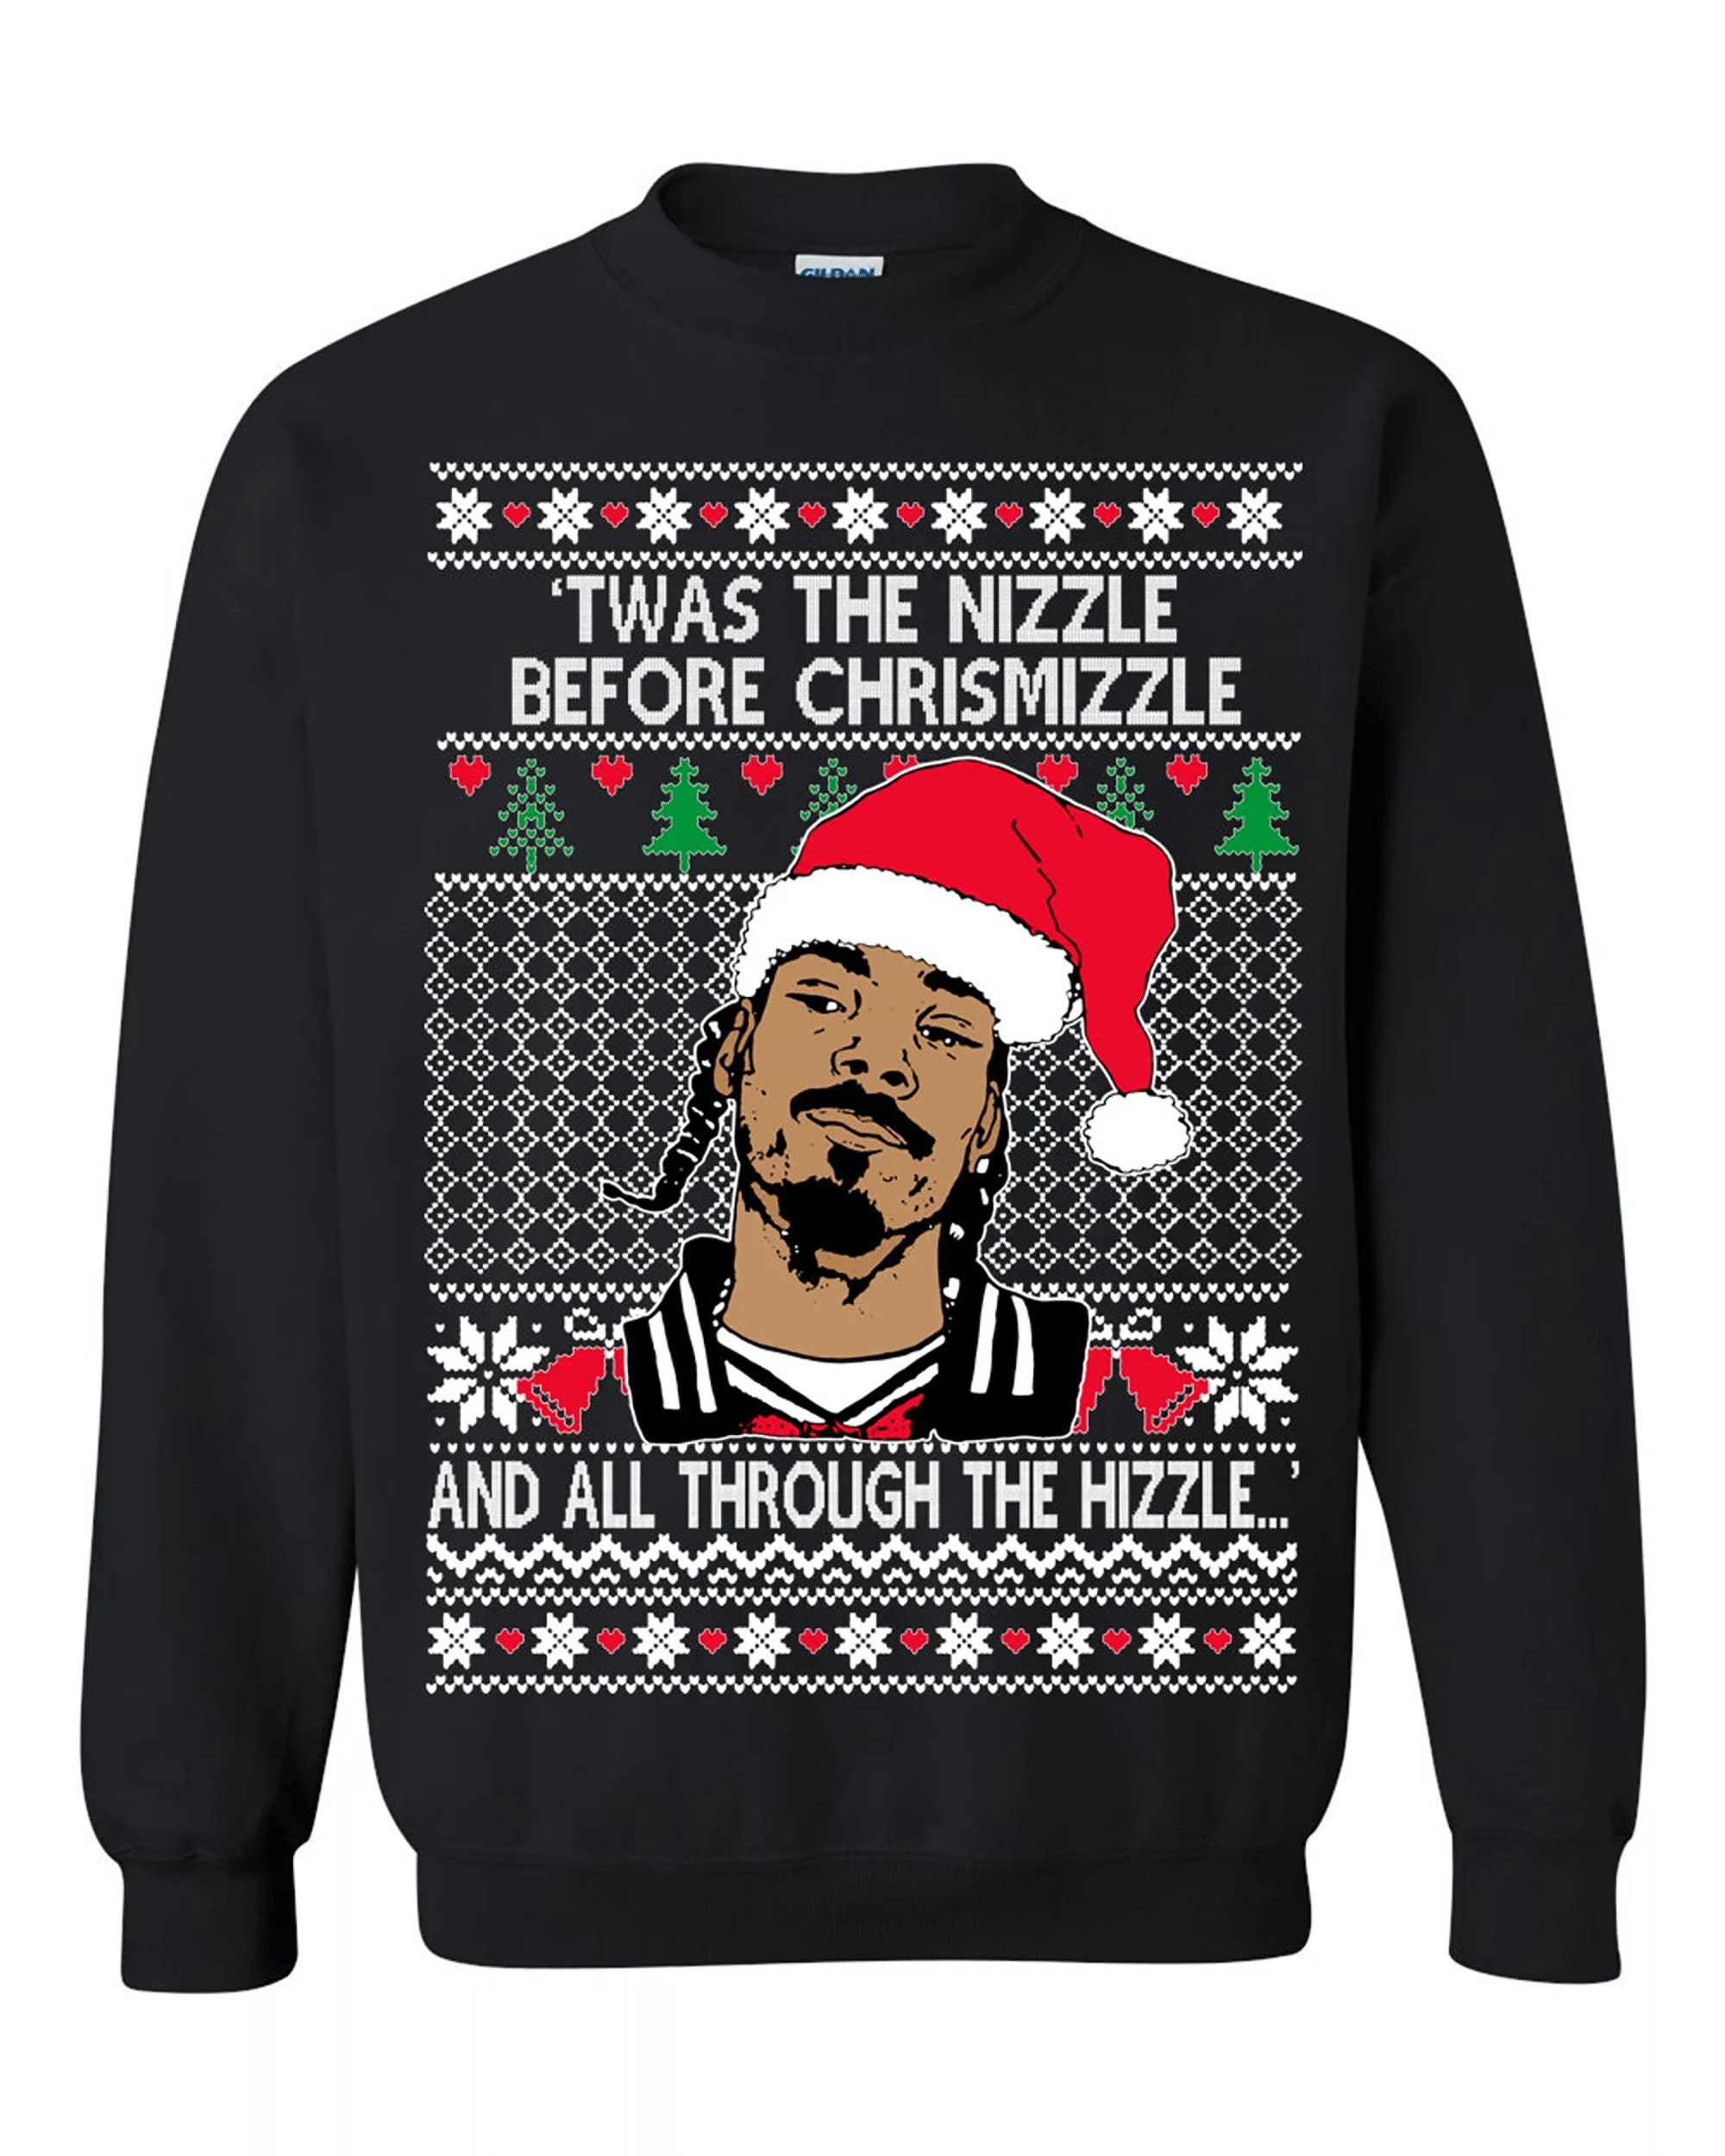 Snoop Dogg 'Twas The Nizzle Before Chrismizzle Sweatshirt